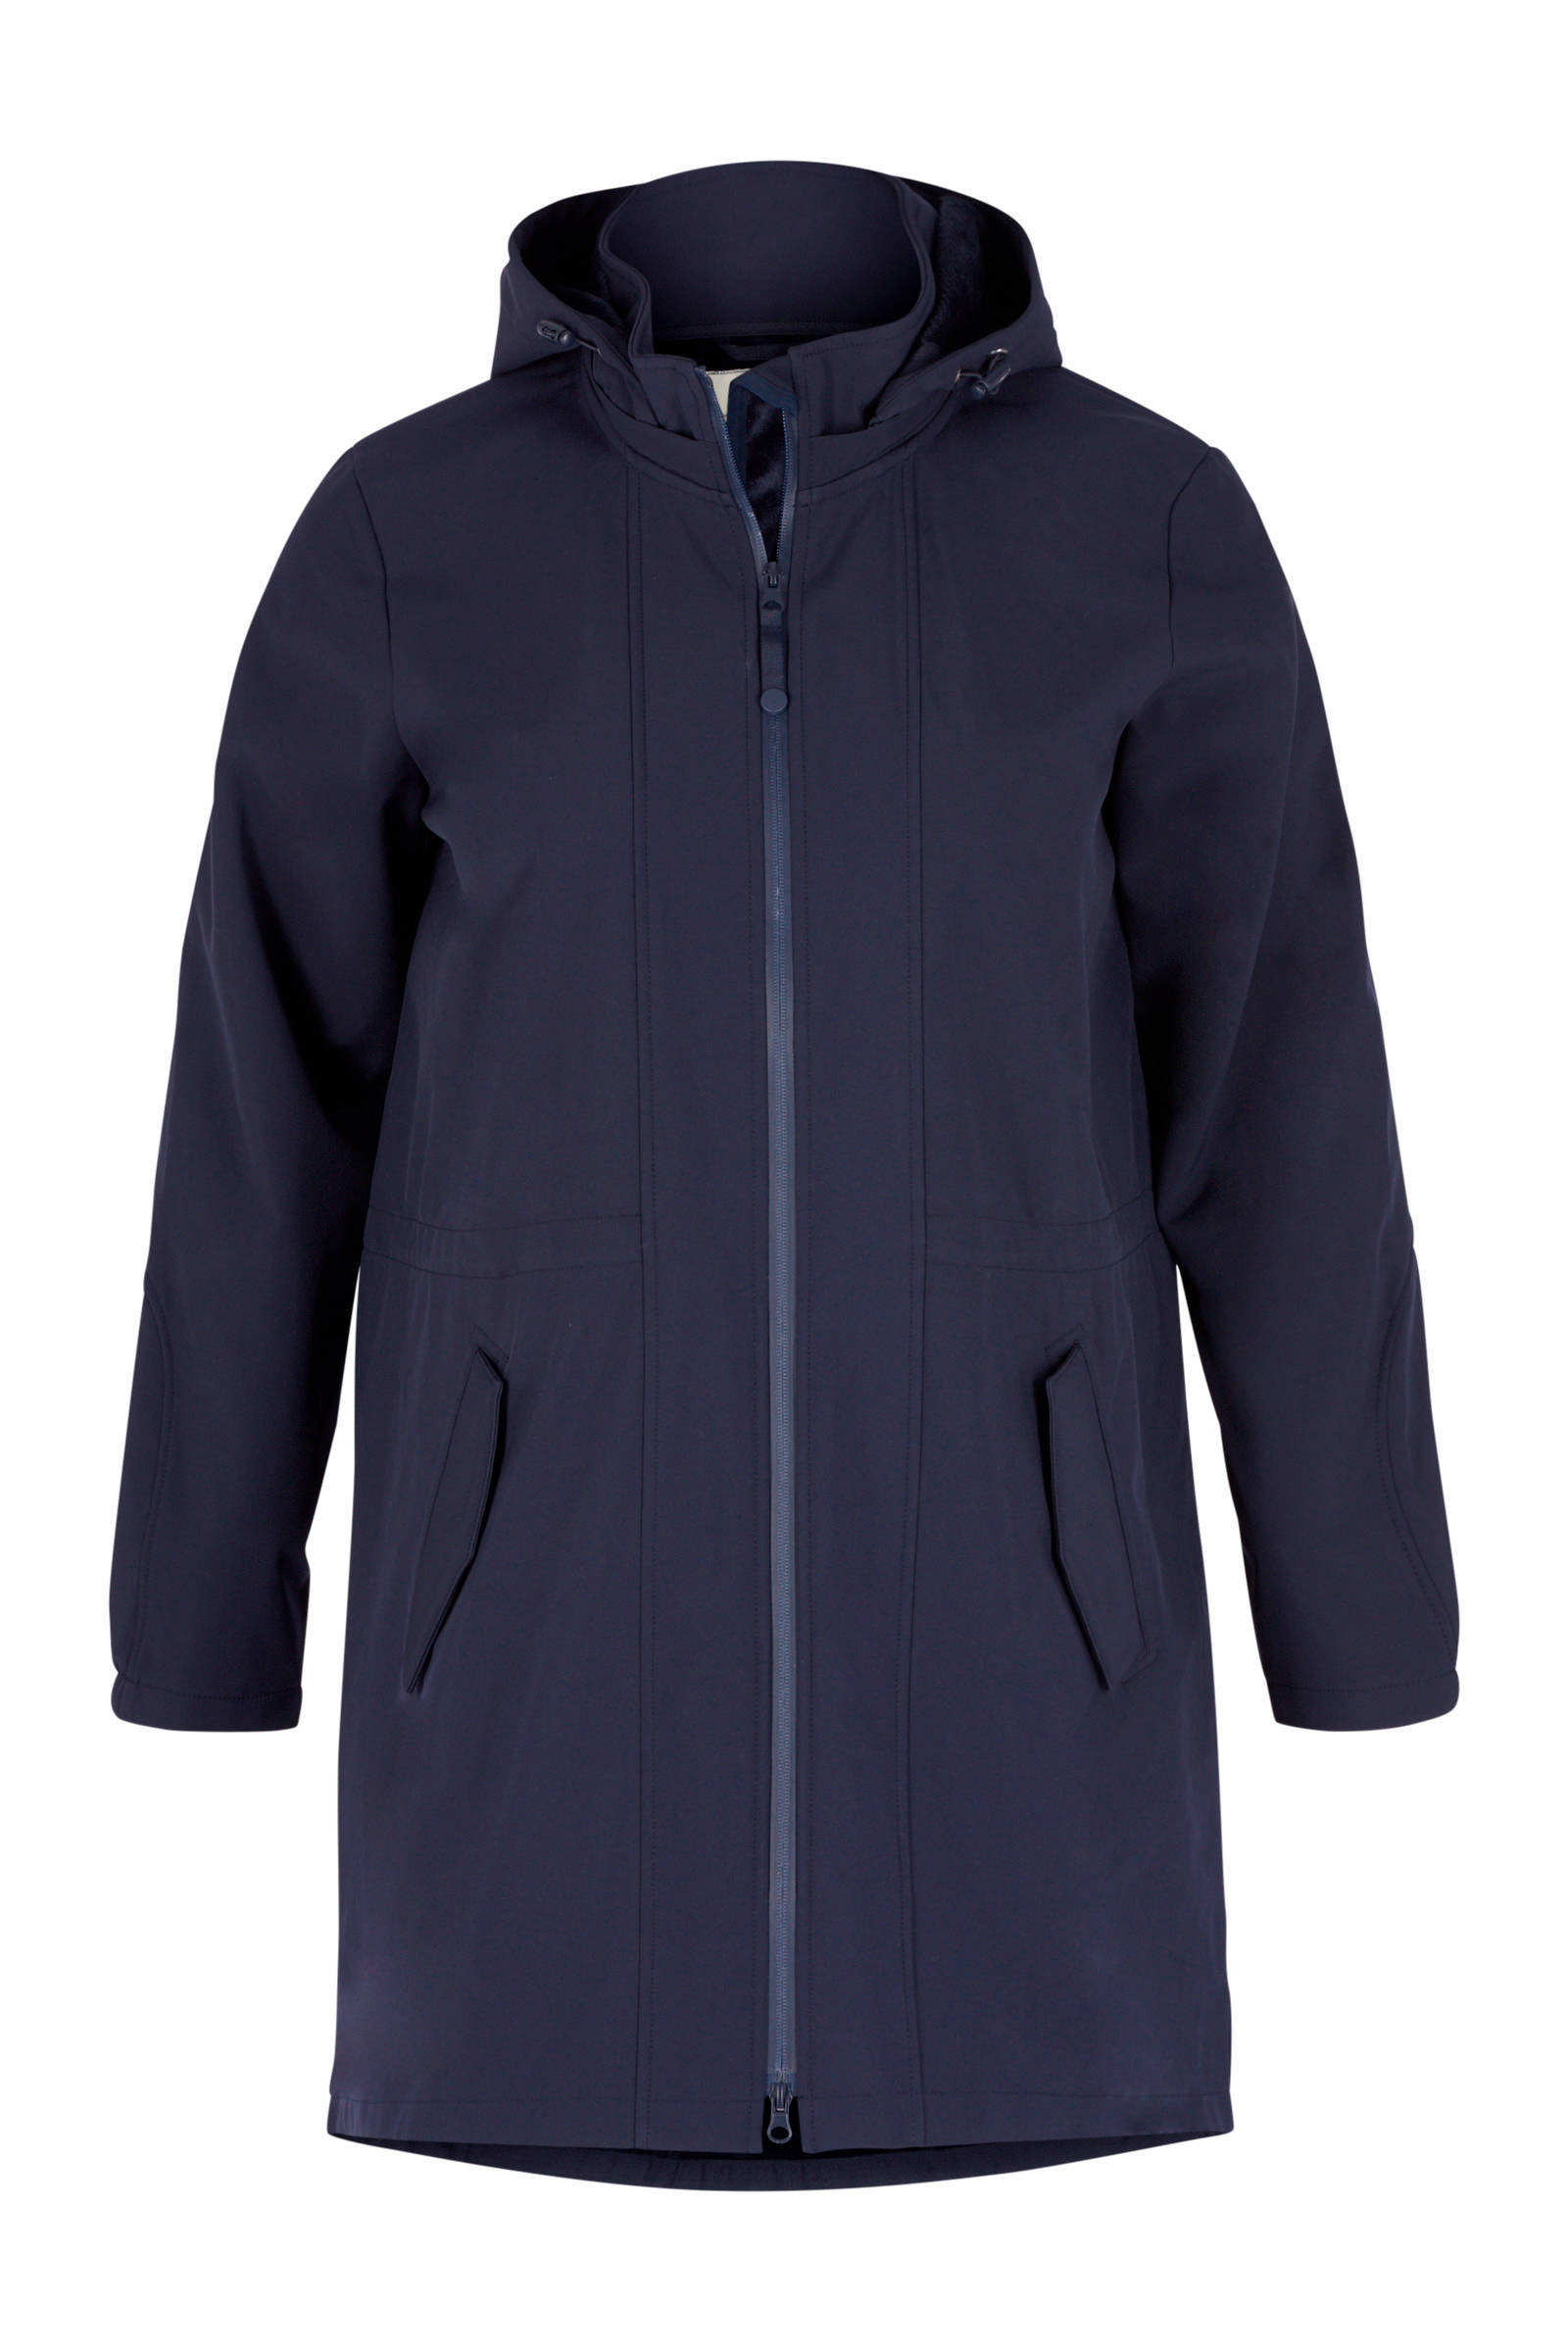 Zizzi waterafstotende softshell jas donkerblauw online kopen